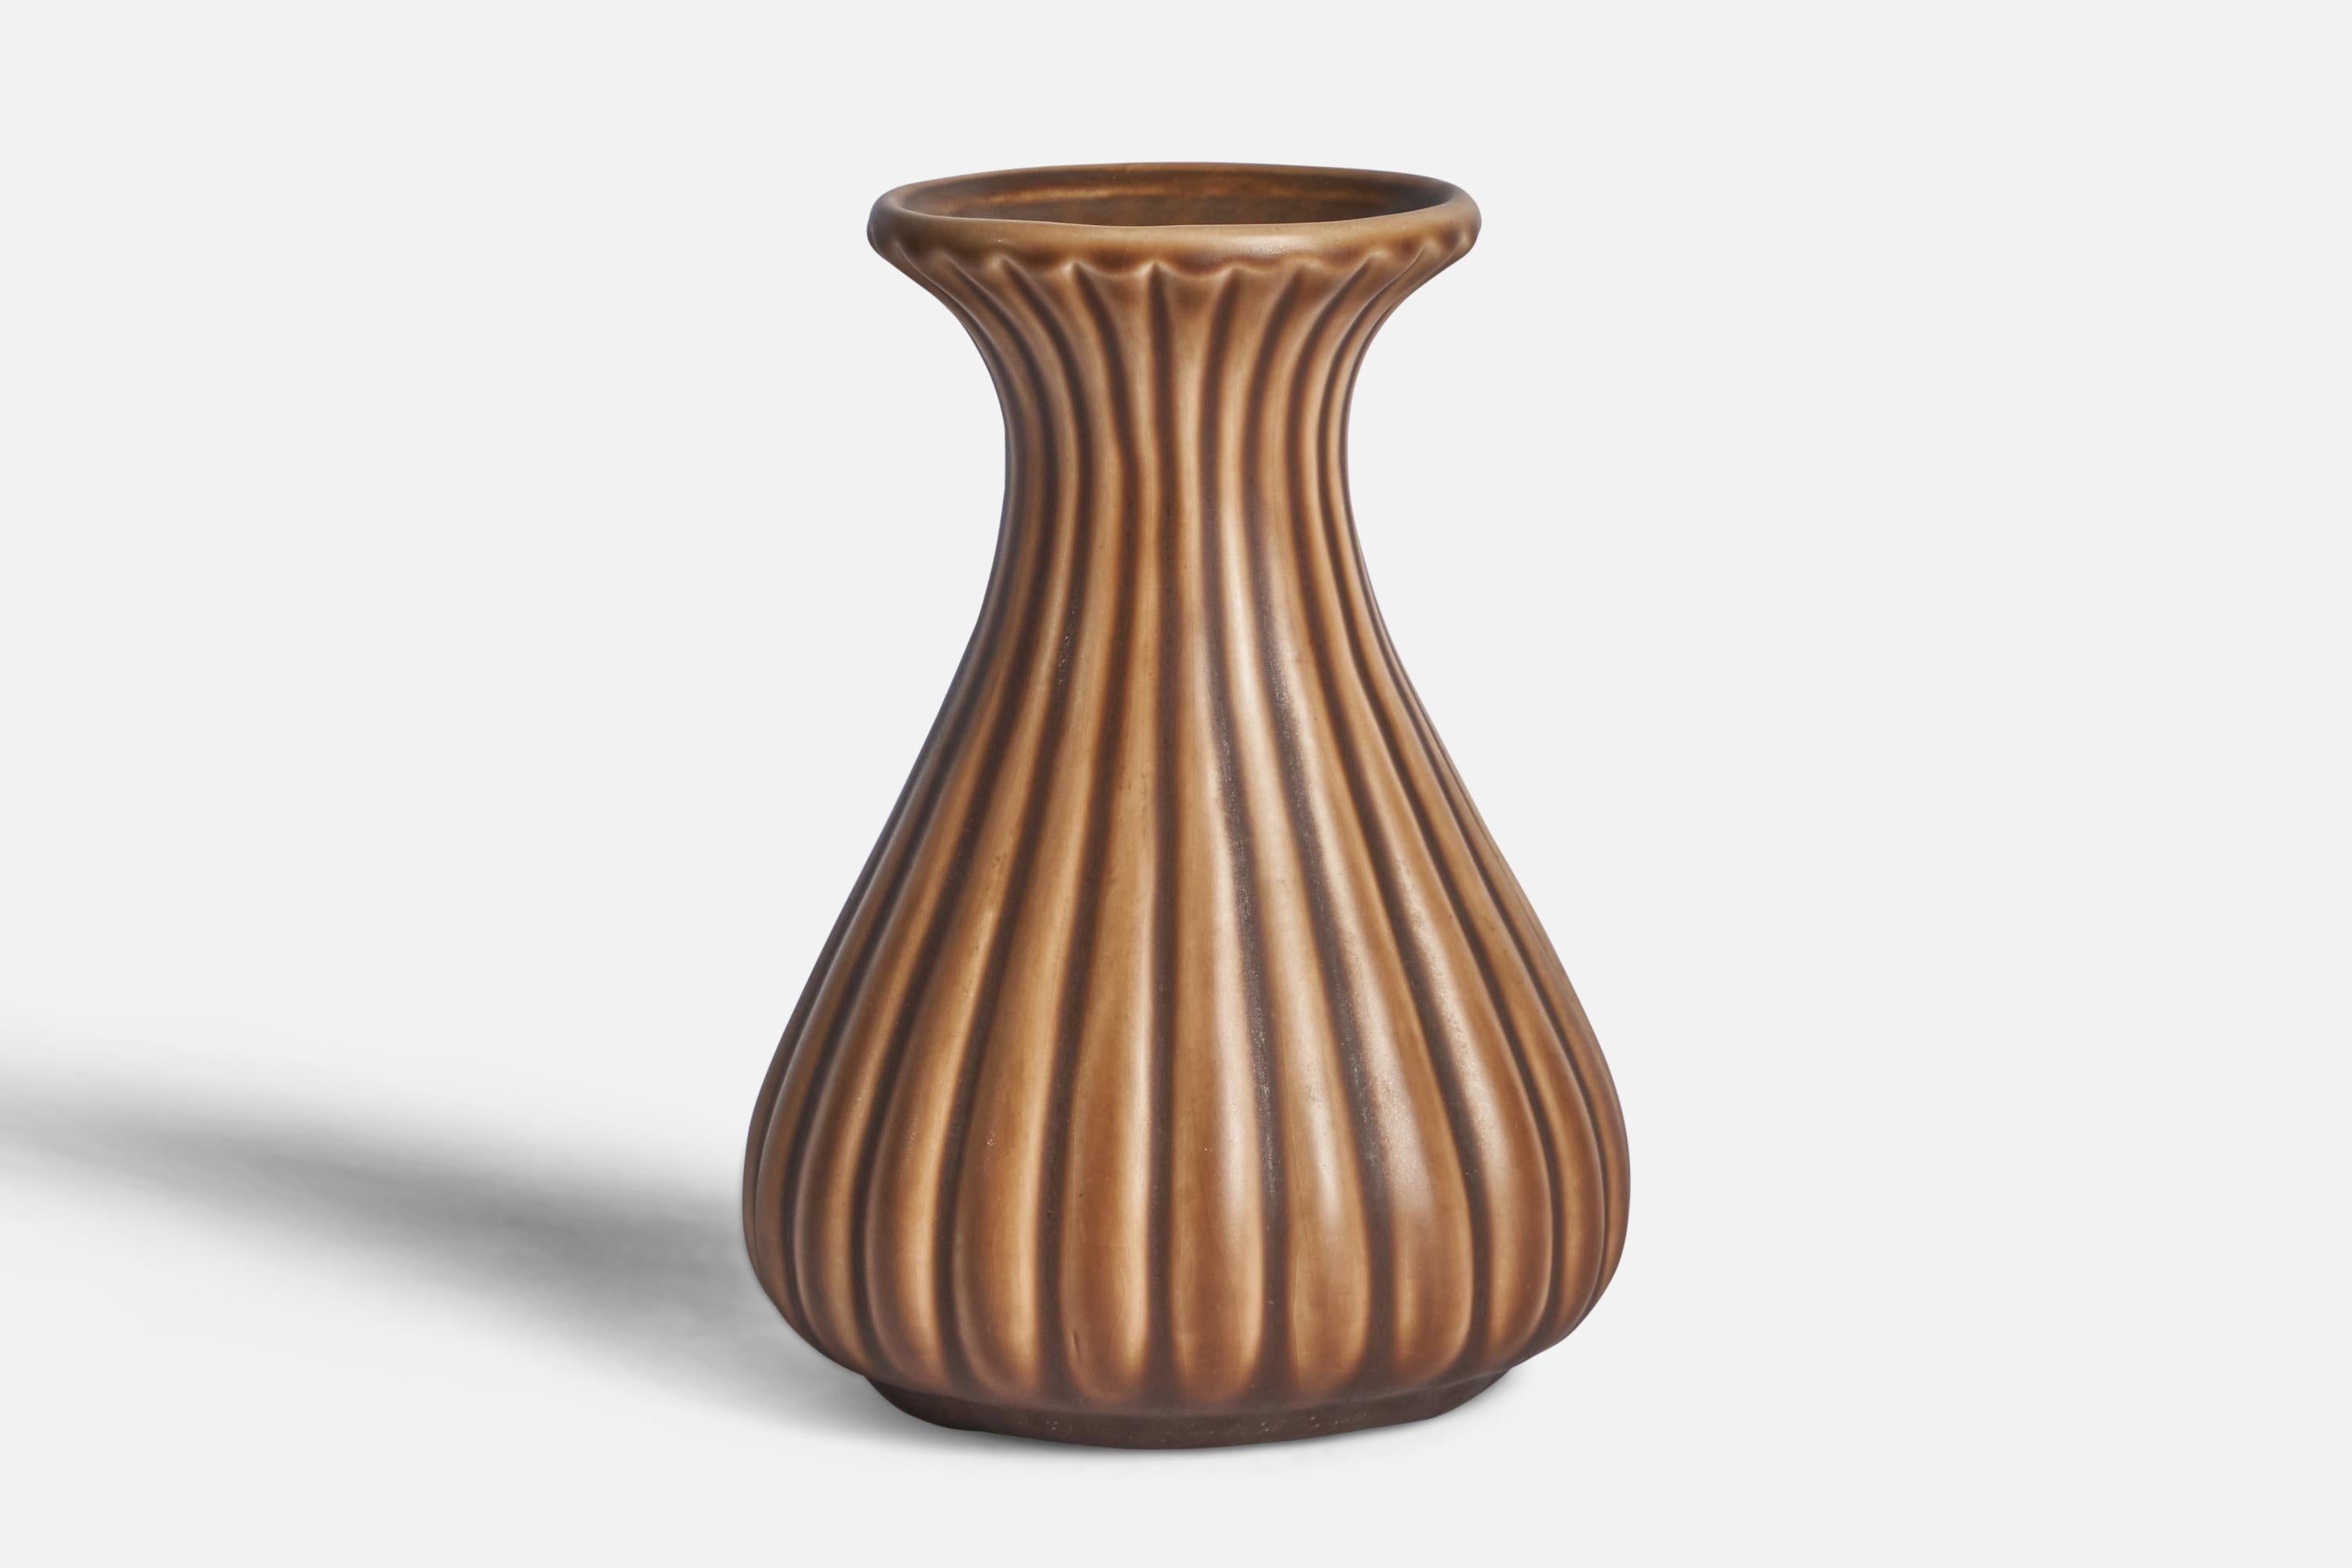 A fluted brown-glazed earthenware vase designed by Ewald Dahlskog and produced by Bo Fajans, Sweden, 1940s.